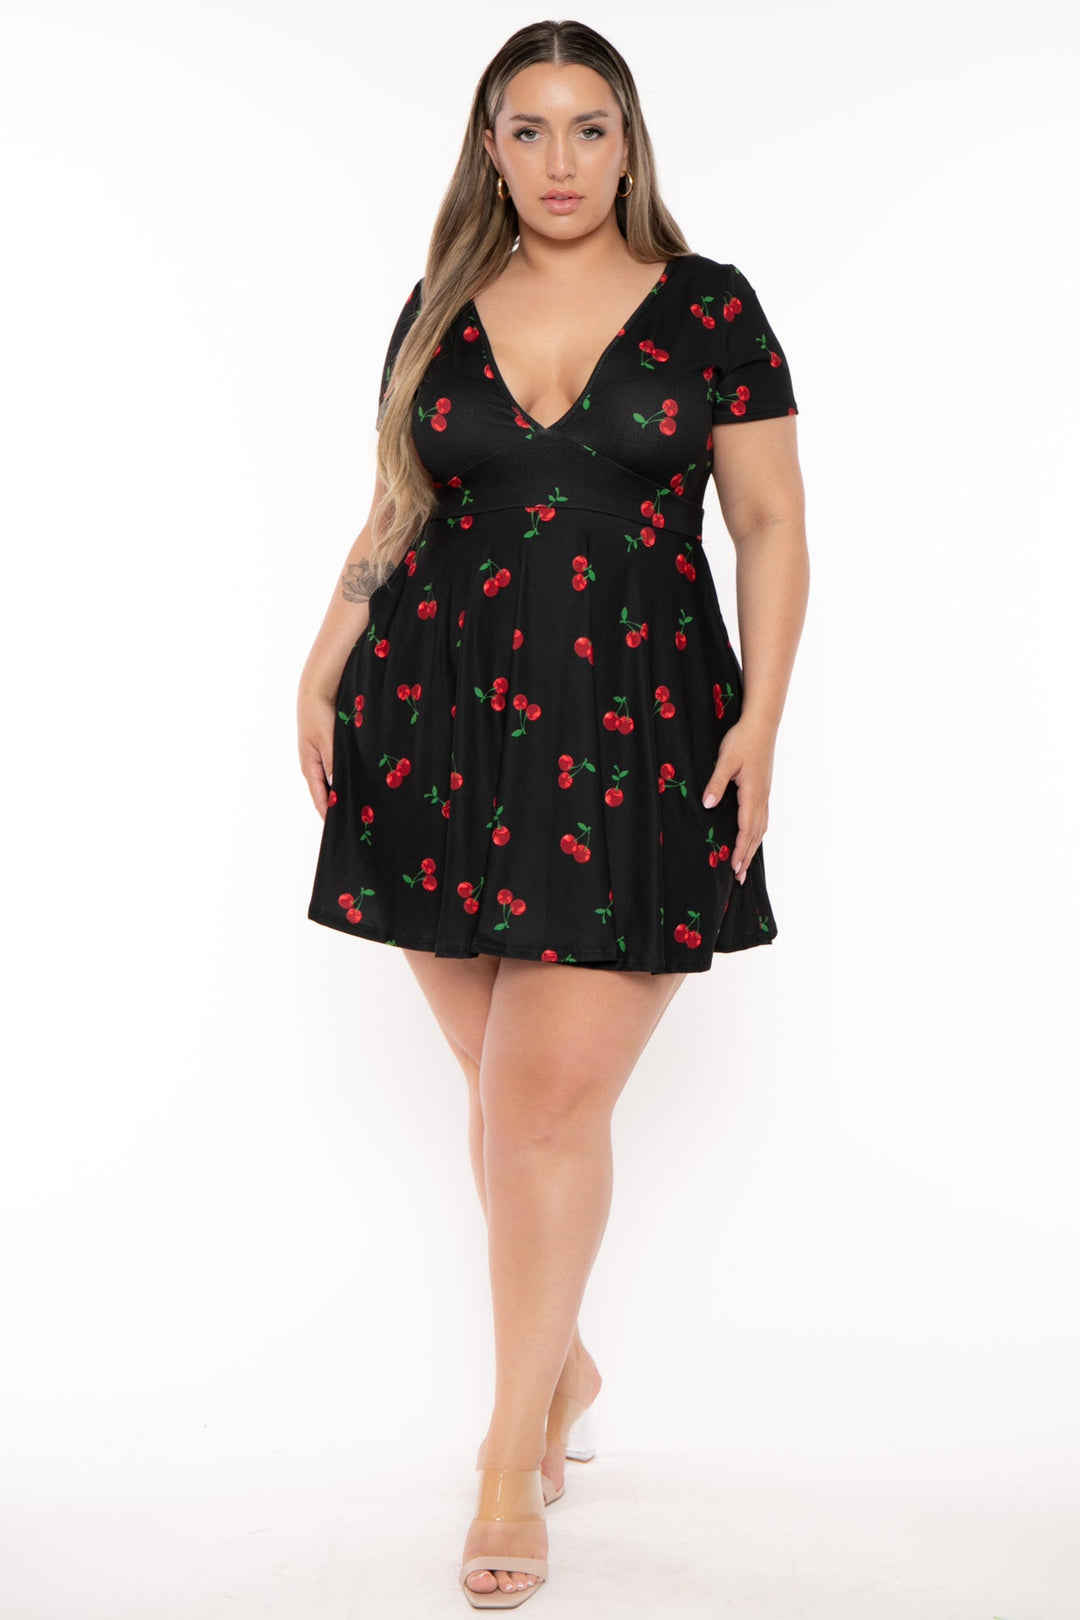 Curvy Sense Dresses Plus Size Jayne Cherry Flare Dress - Black